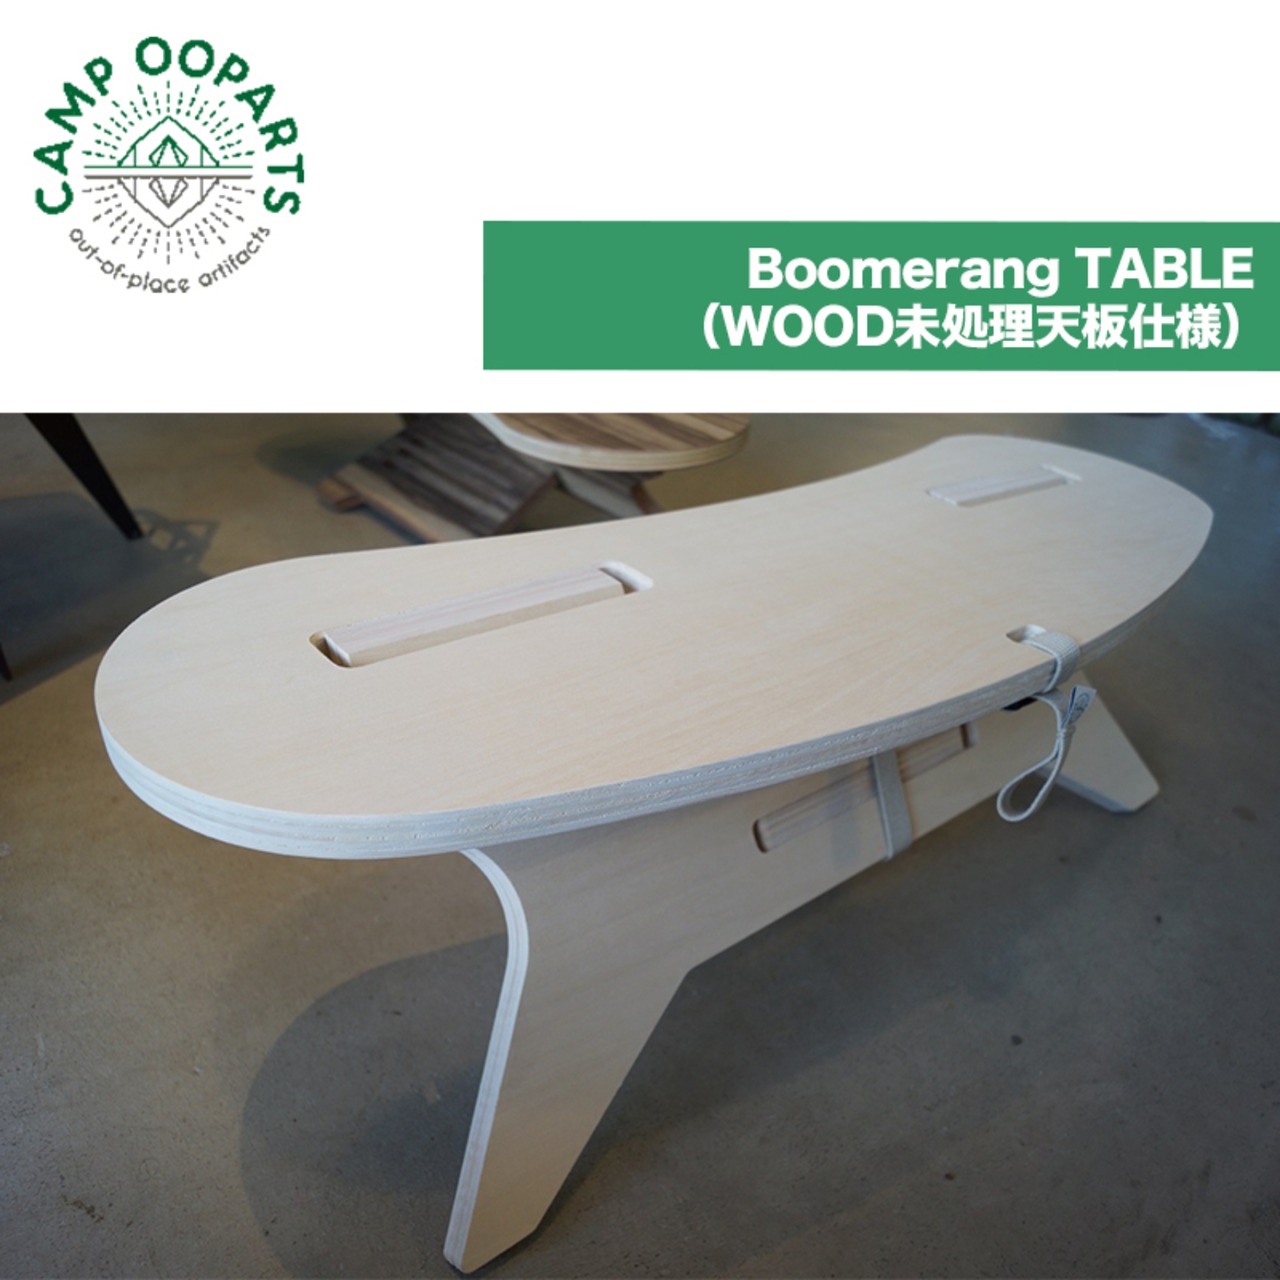 CAMPOOPARTS キャンプオーパーツ BoomerangTABLE (WOOD未処理天板仕様) C型テーブル ブーメラン